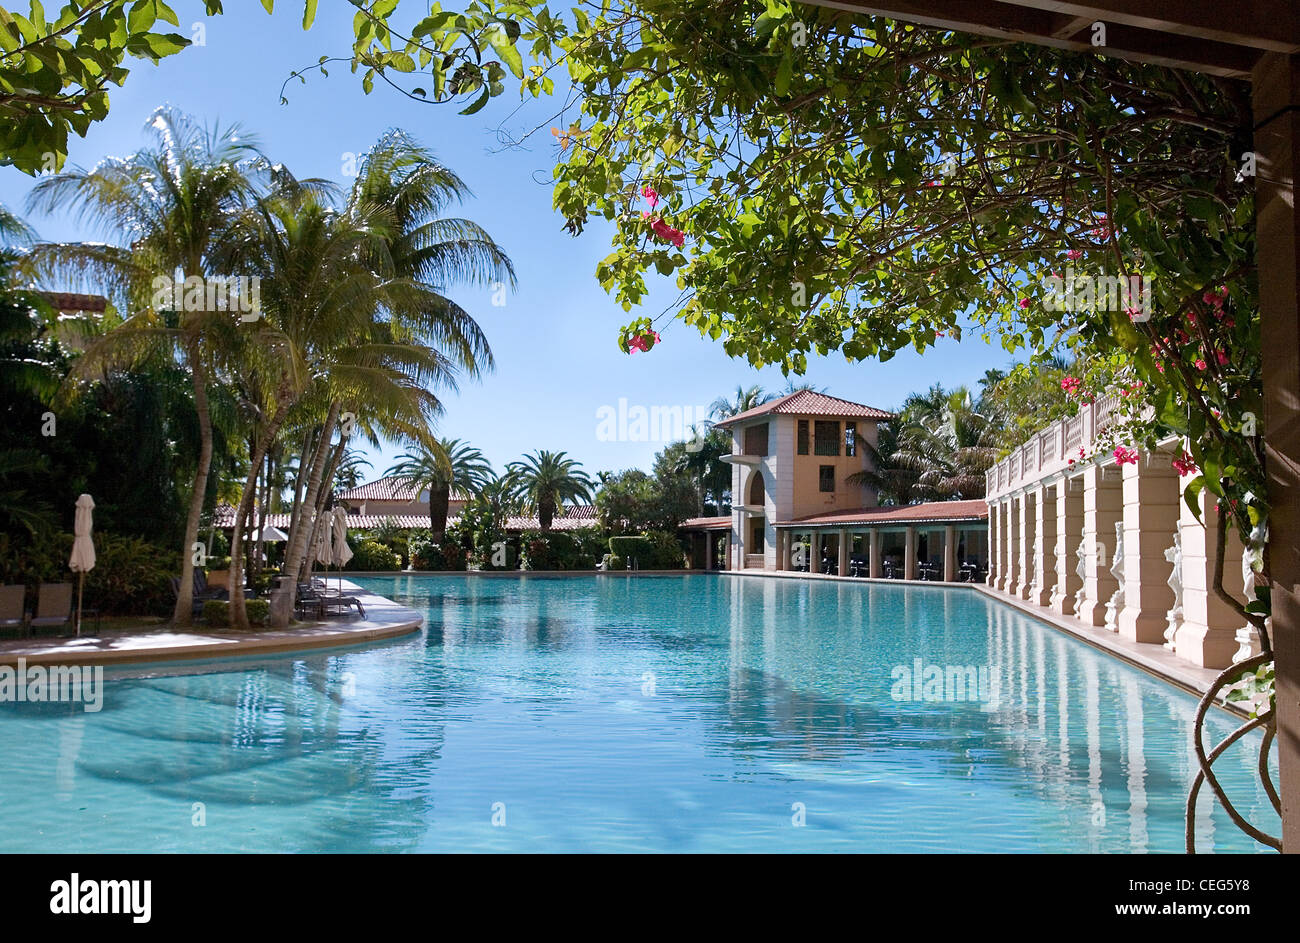 The Biltmore hotel pool, Miami, Florida, USA Stock Photo